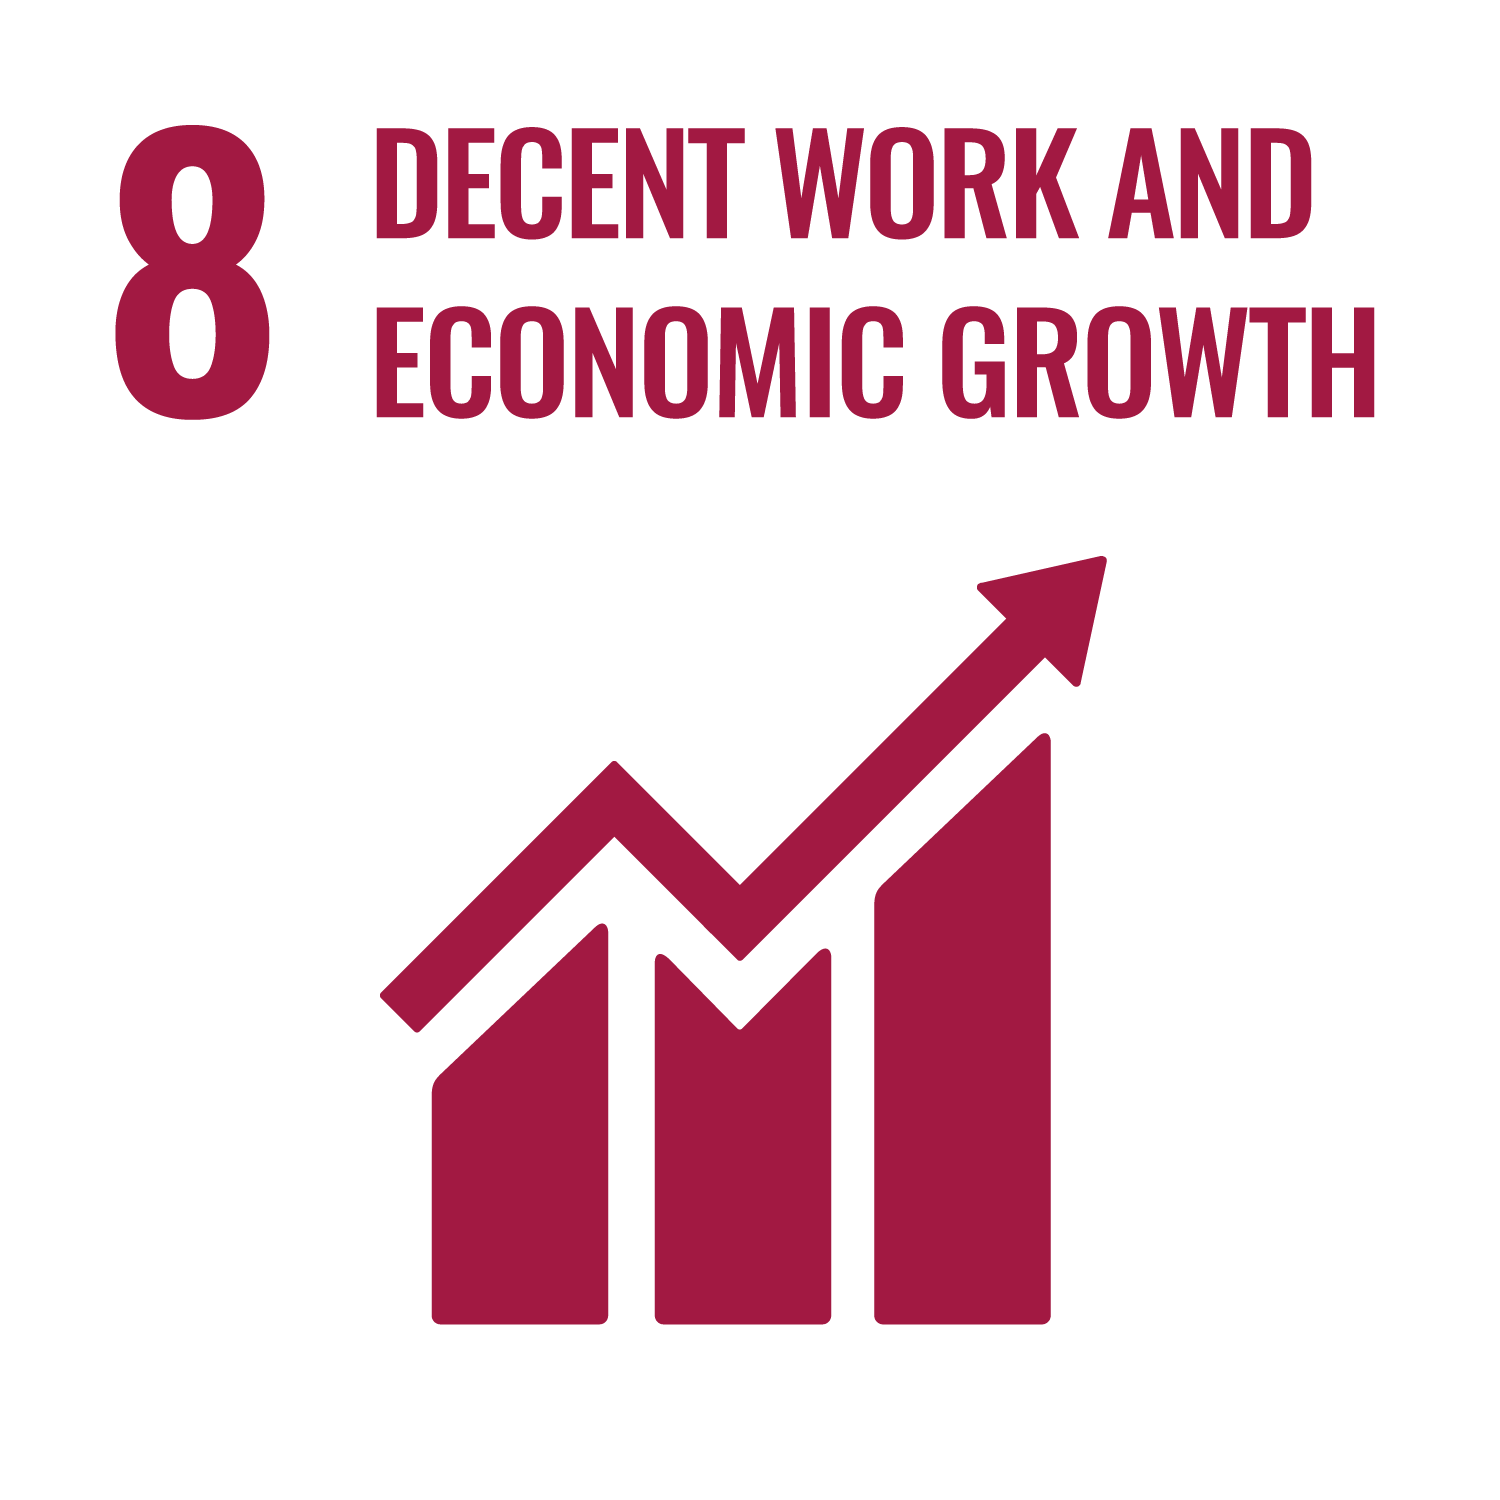 UN SDG 8: Decent work and economic growth